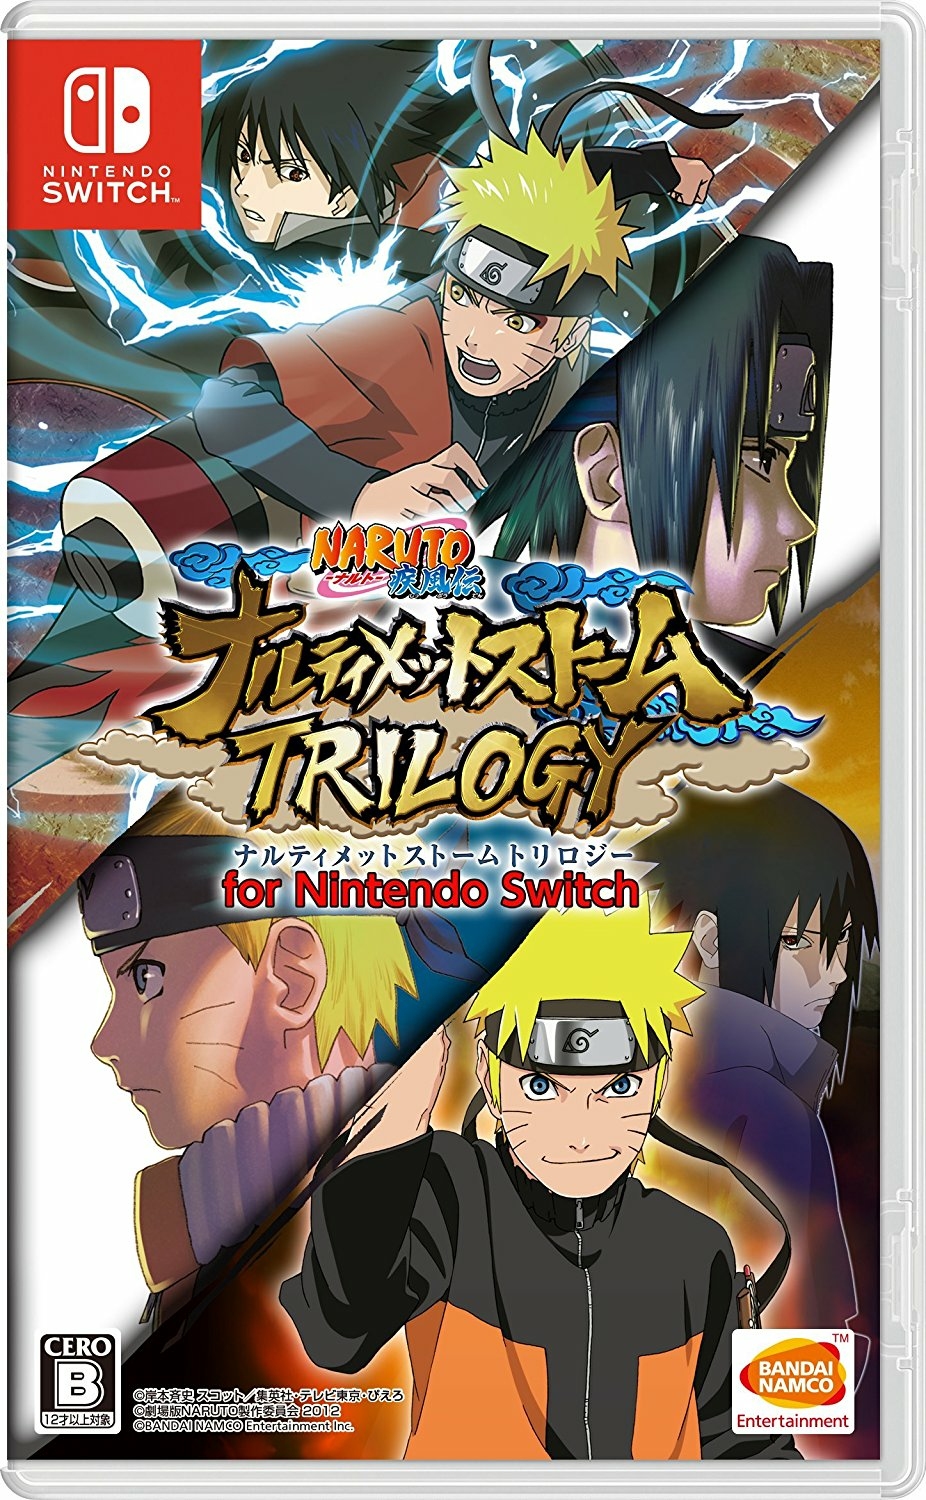 Jeu Nintendo Switch Naruto Ultimate Ninja Storm 3 Full Burst - Code in a box